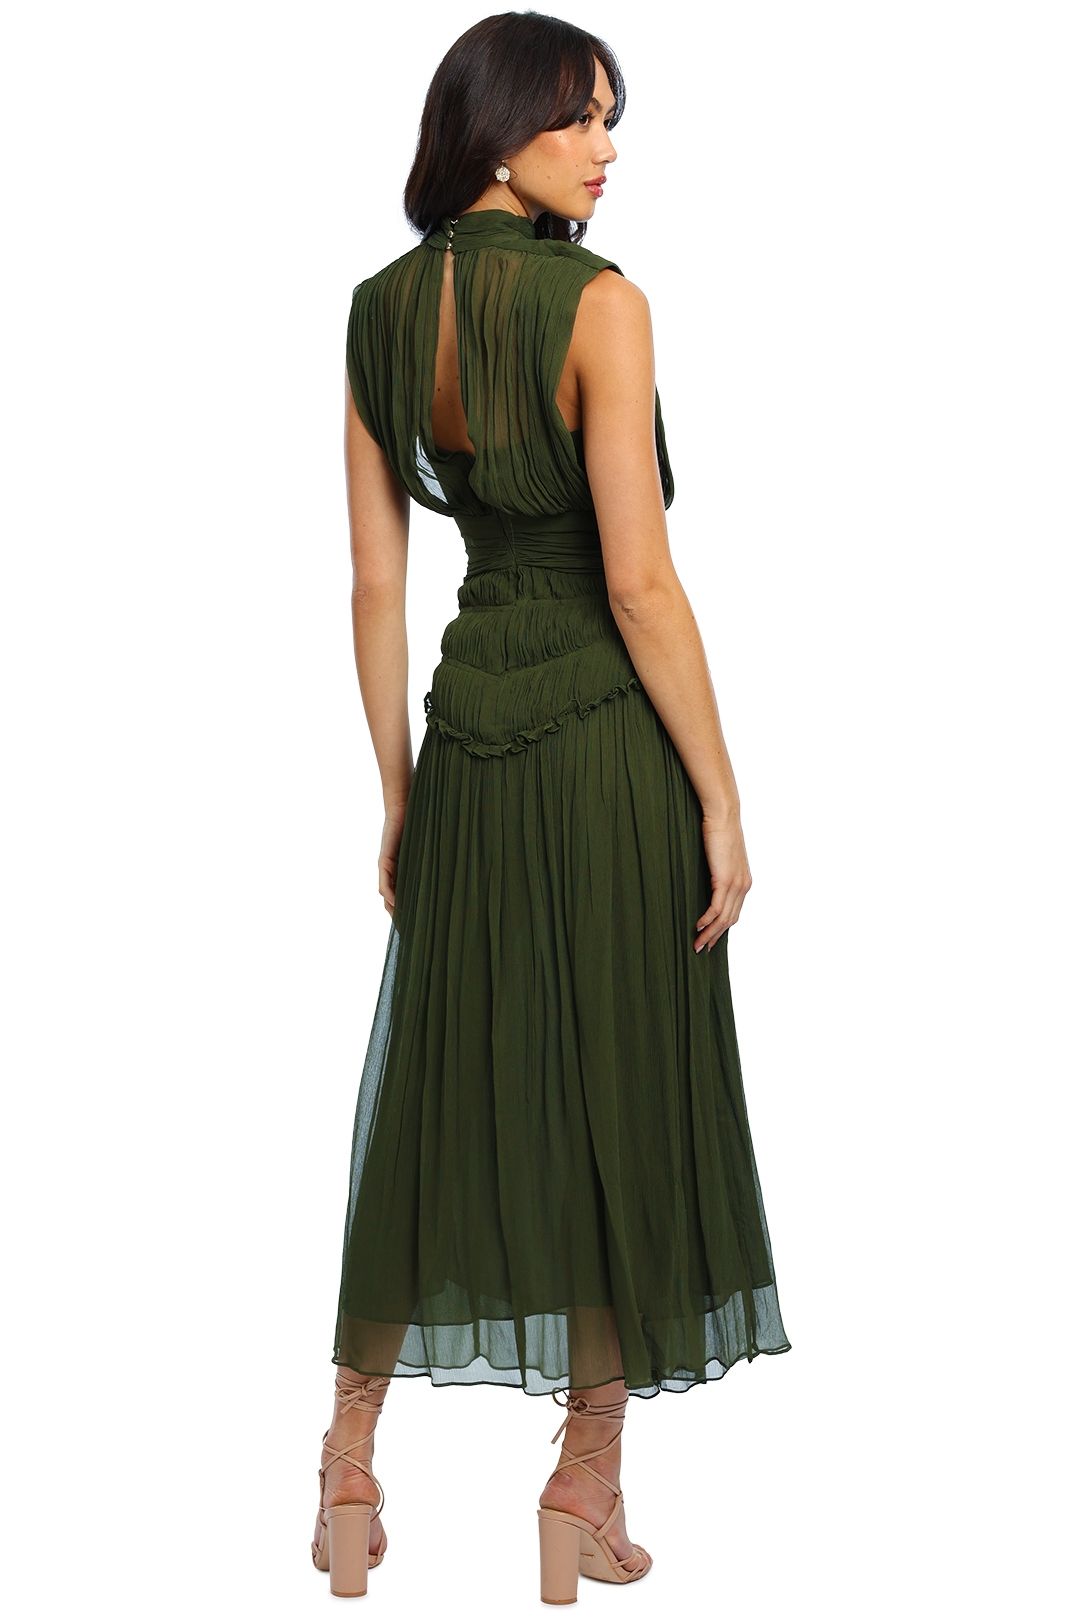 Shona Joy Clemence Maxi Dress khaki green